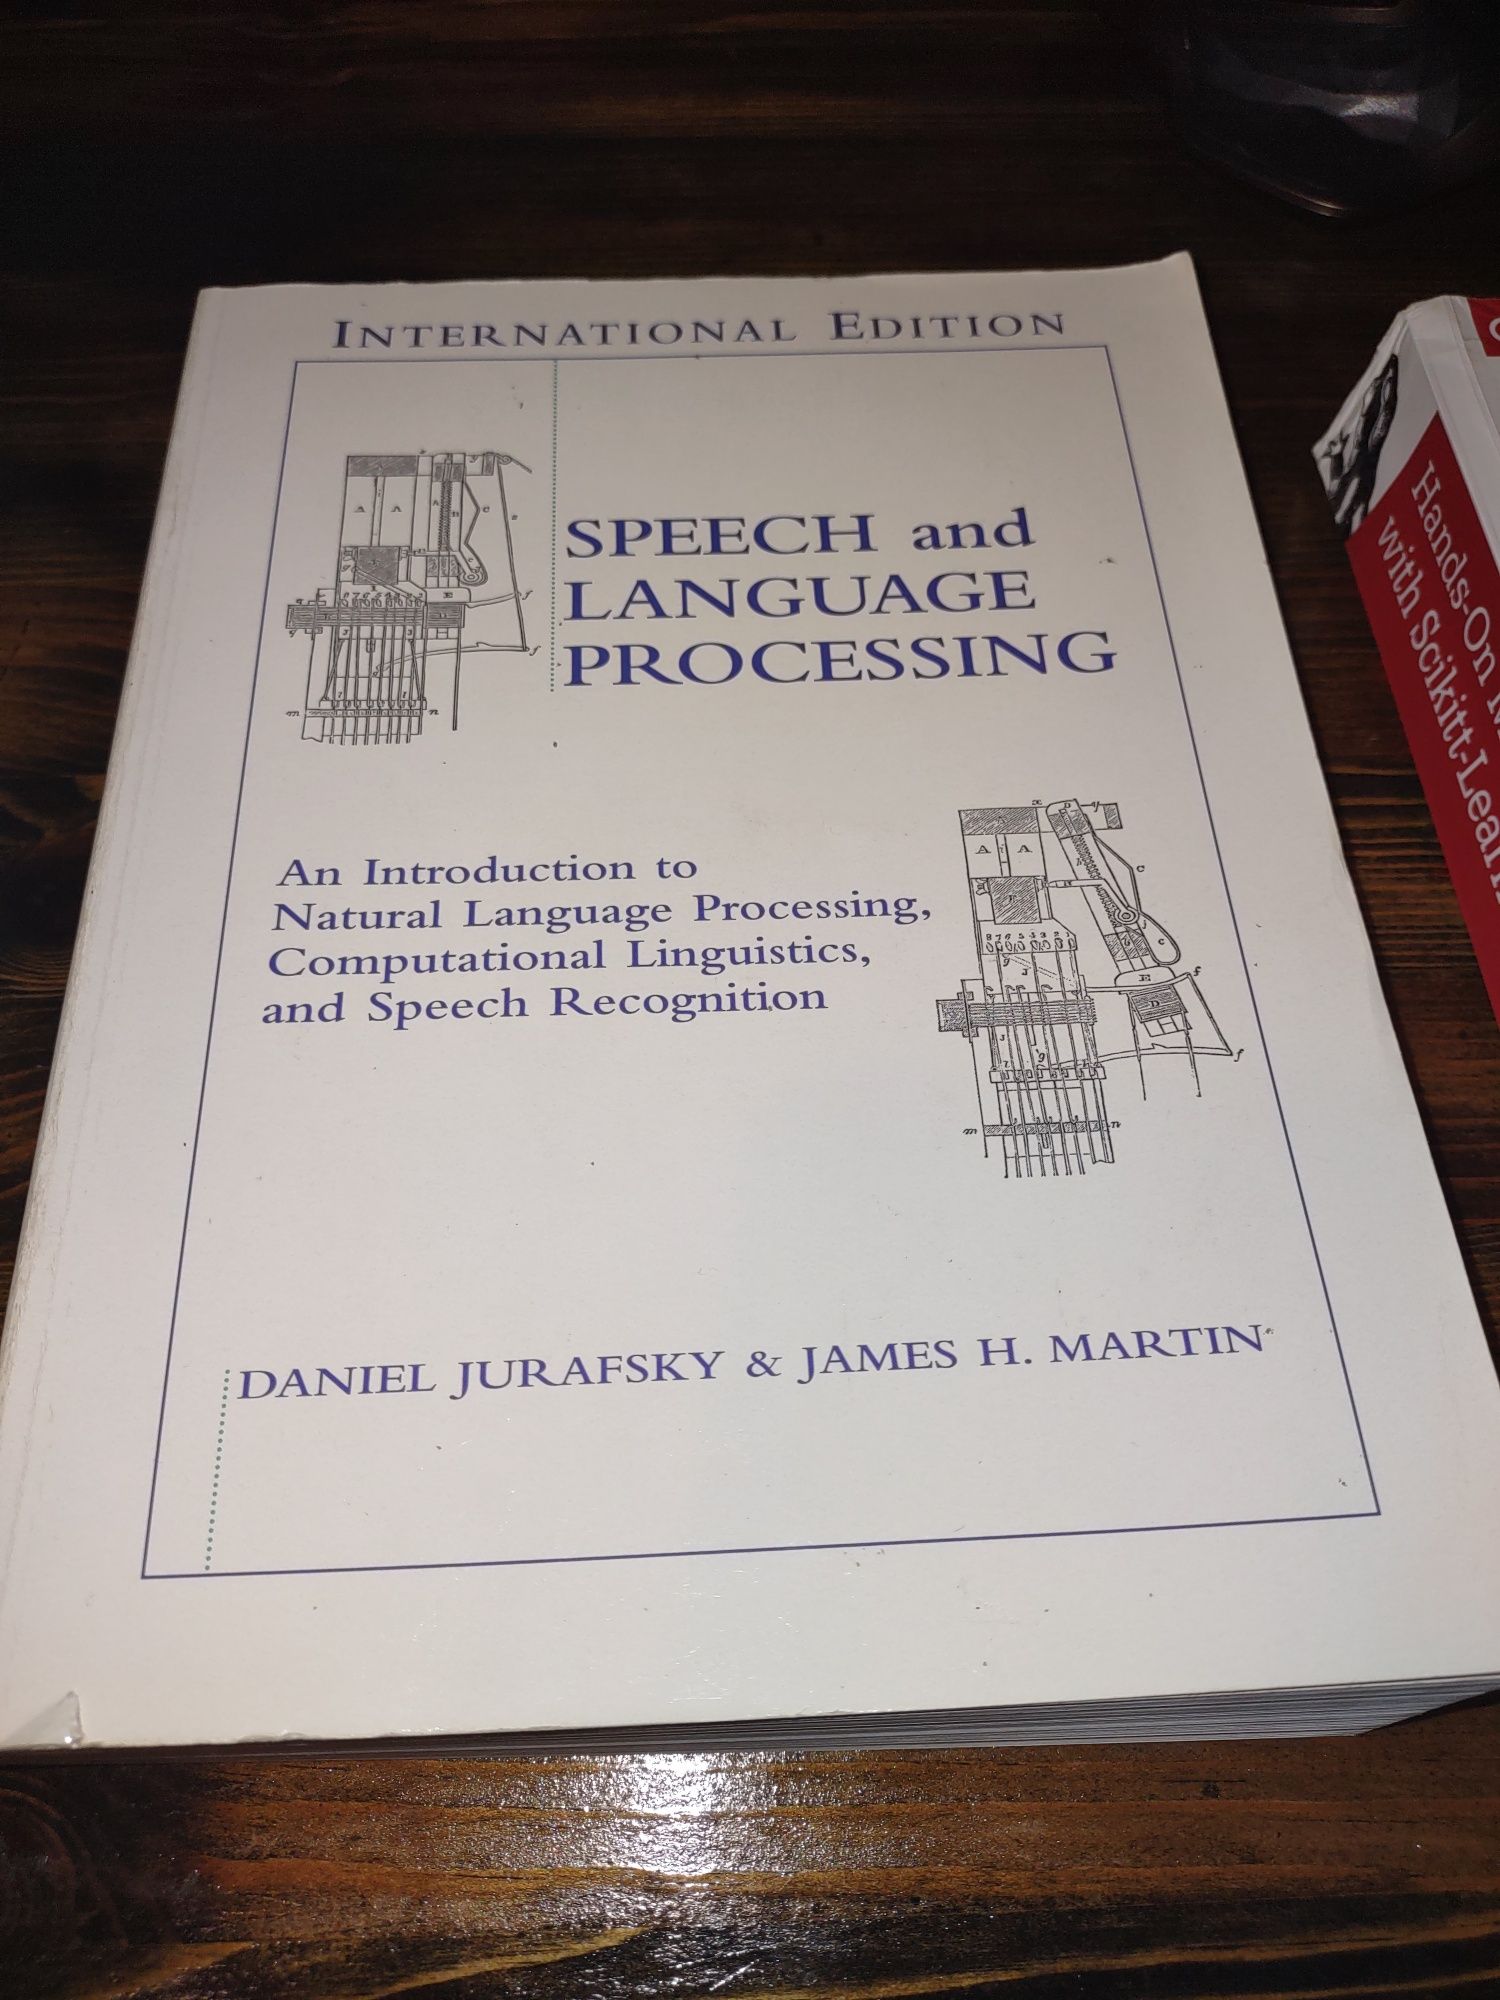 Speech and language processing